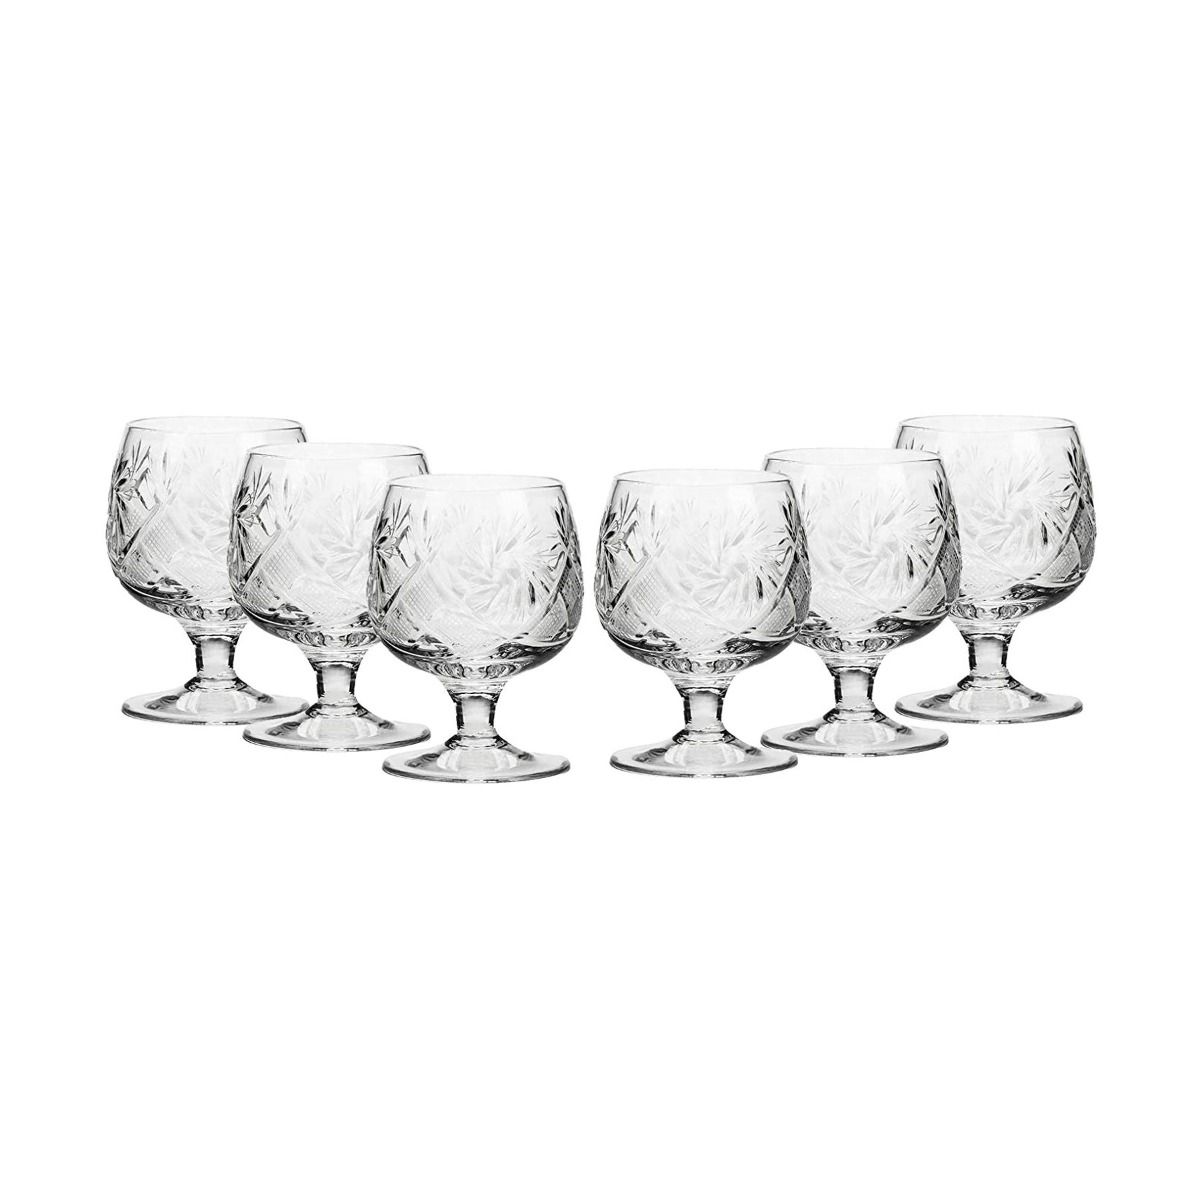 Set of 6 Admiralty Crystal Brandy Glasses